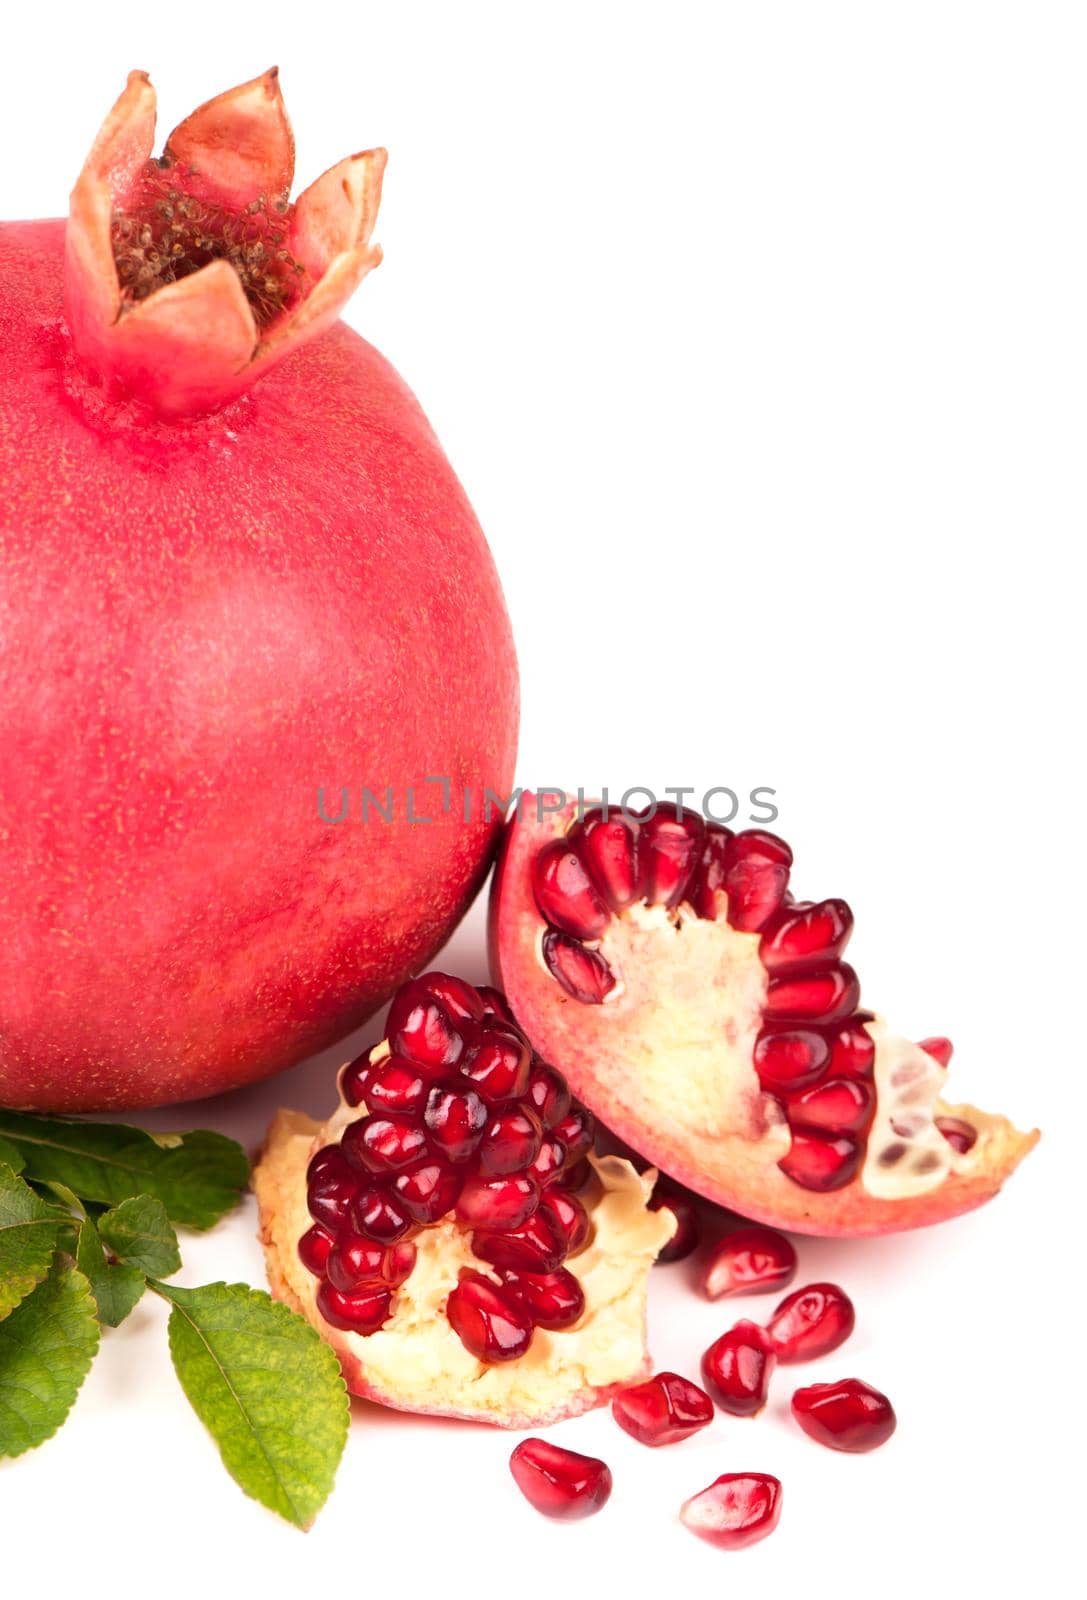 Fresh juicy pomegranate on a white background by aprilphoto